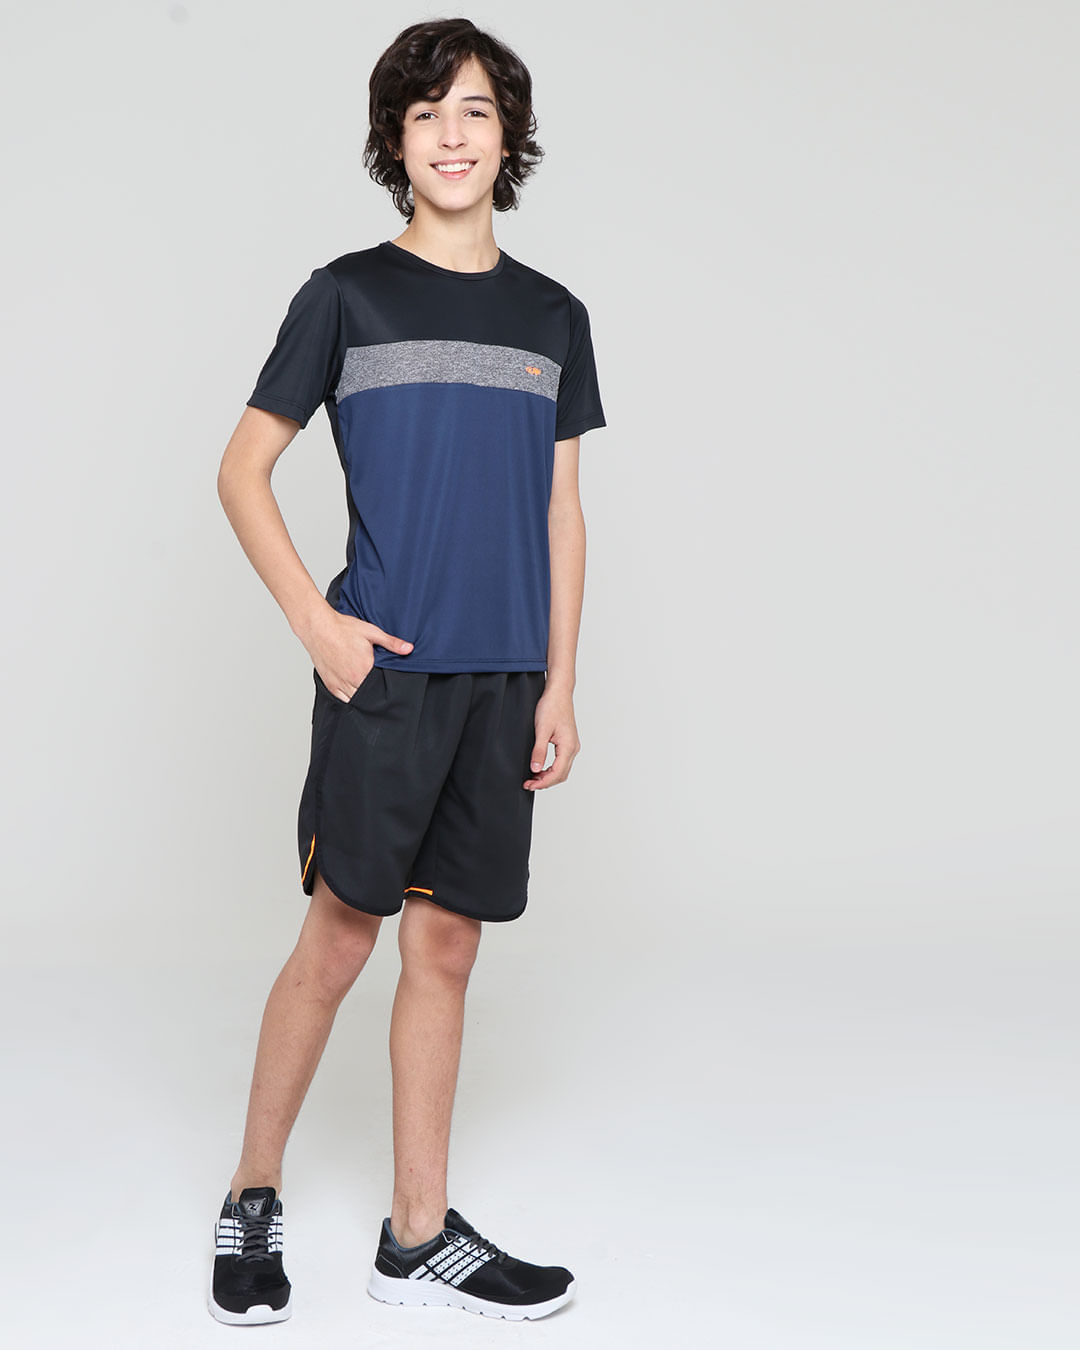 Camiseta-Manga-Curta-Juvenil-Esportiva-Multicor-Azul-Marinho